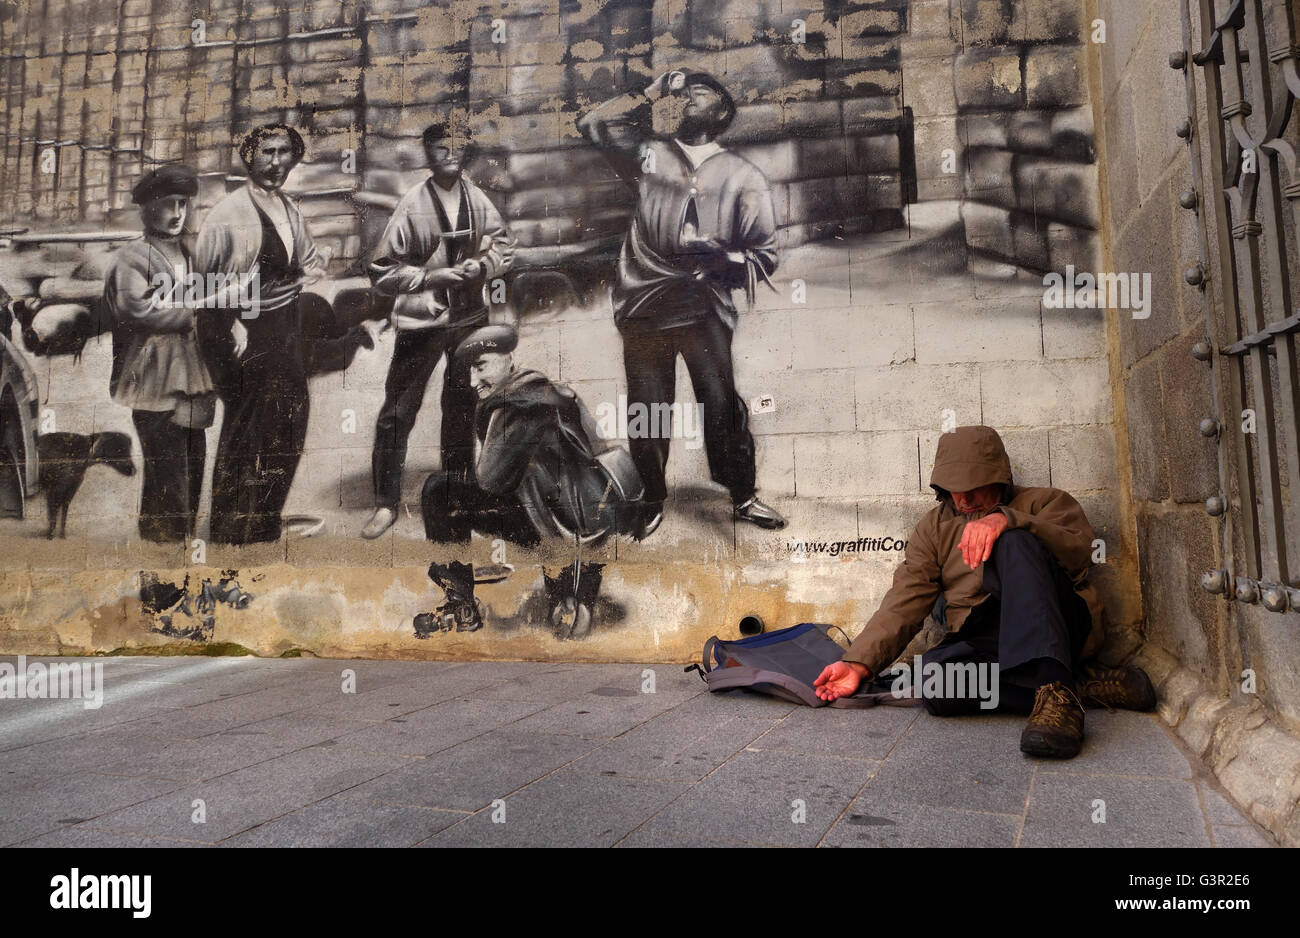 Man begging in front of street mural in Spain Stock Photo